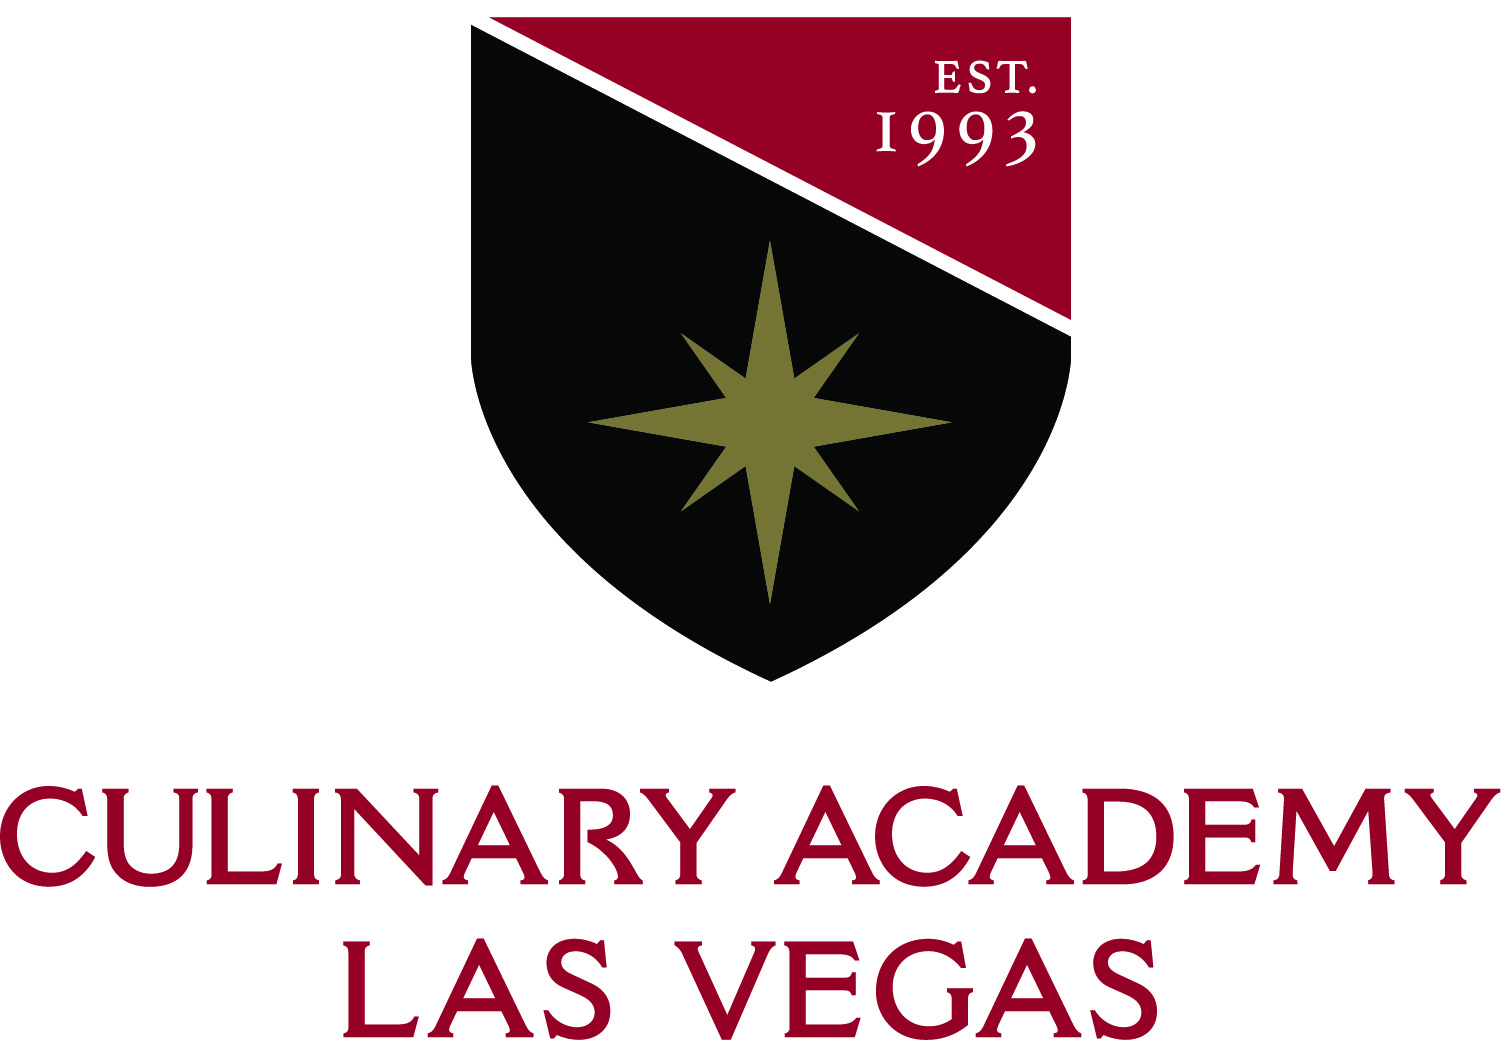 Culinary Academy Las Vegas logo